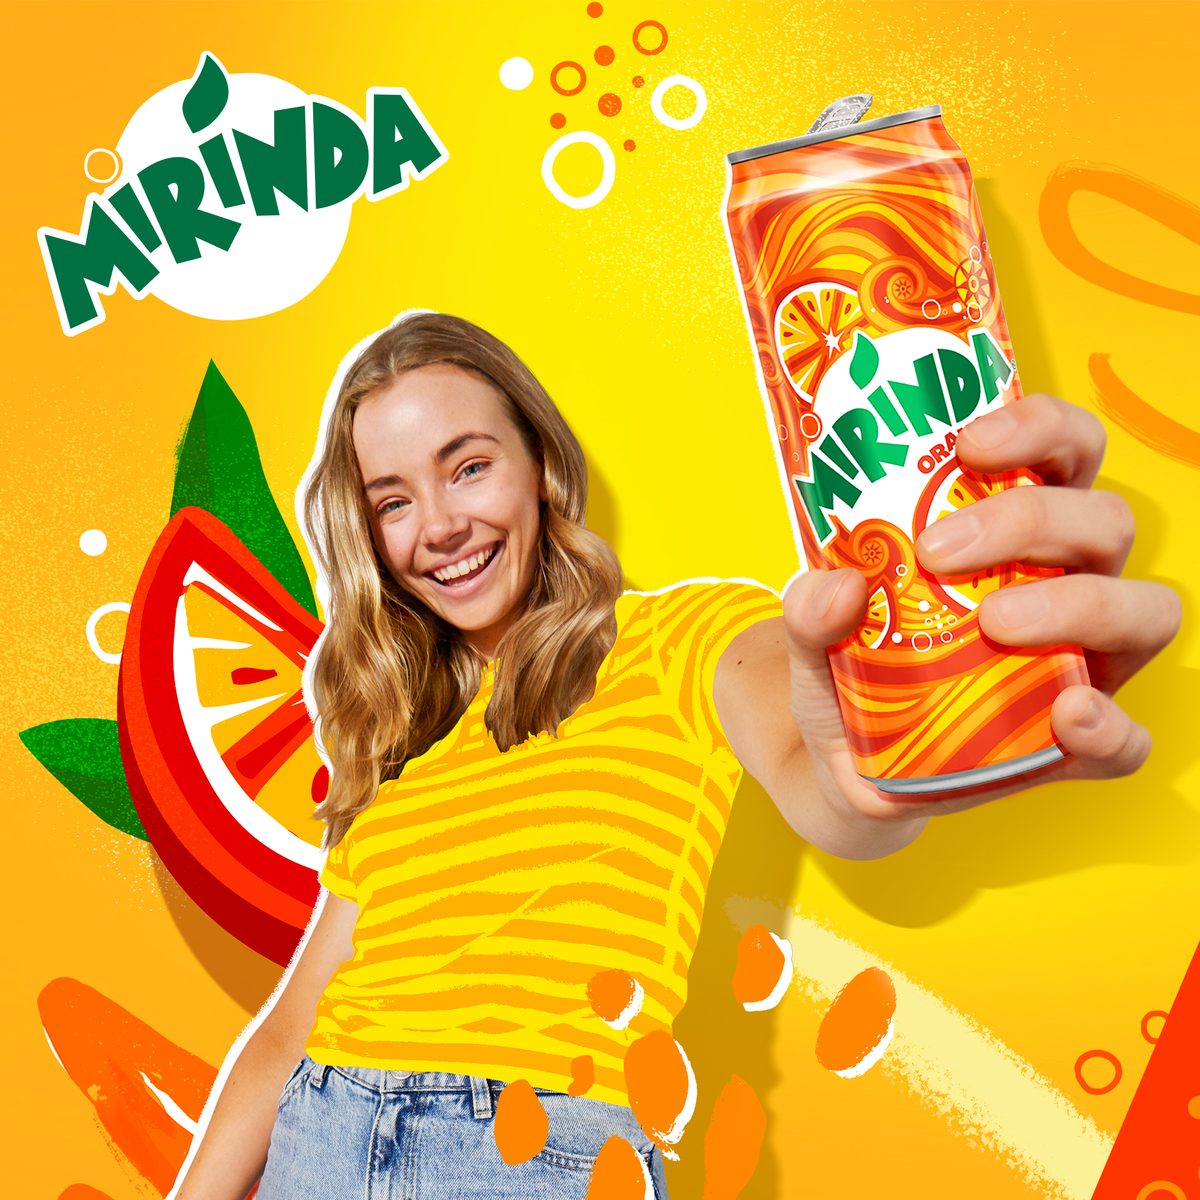 Mirinda Orange Drink 2.28 Litres